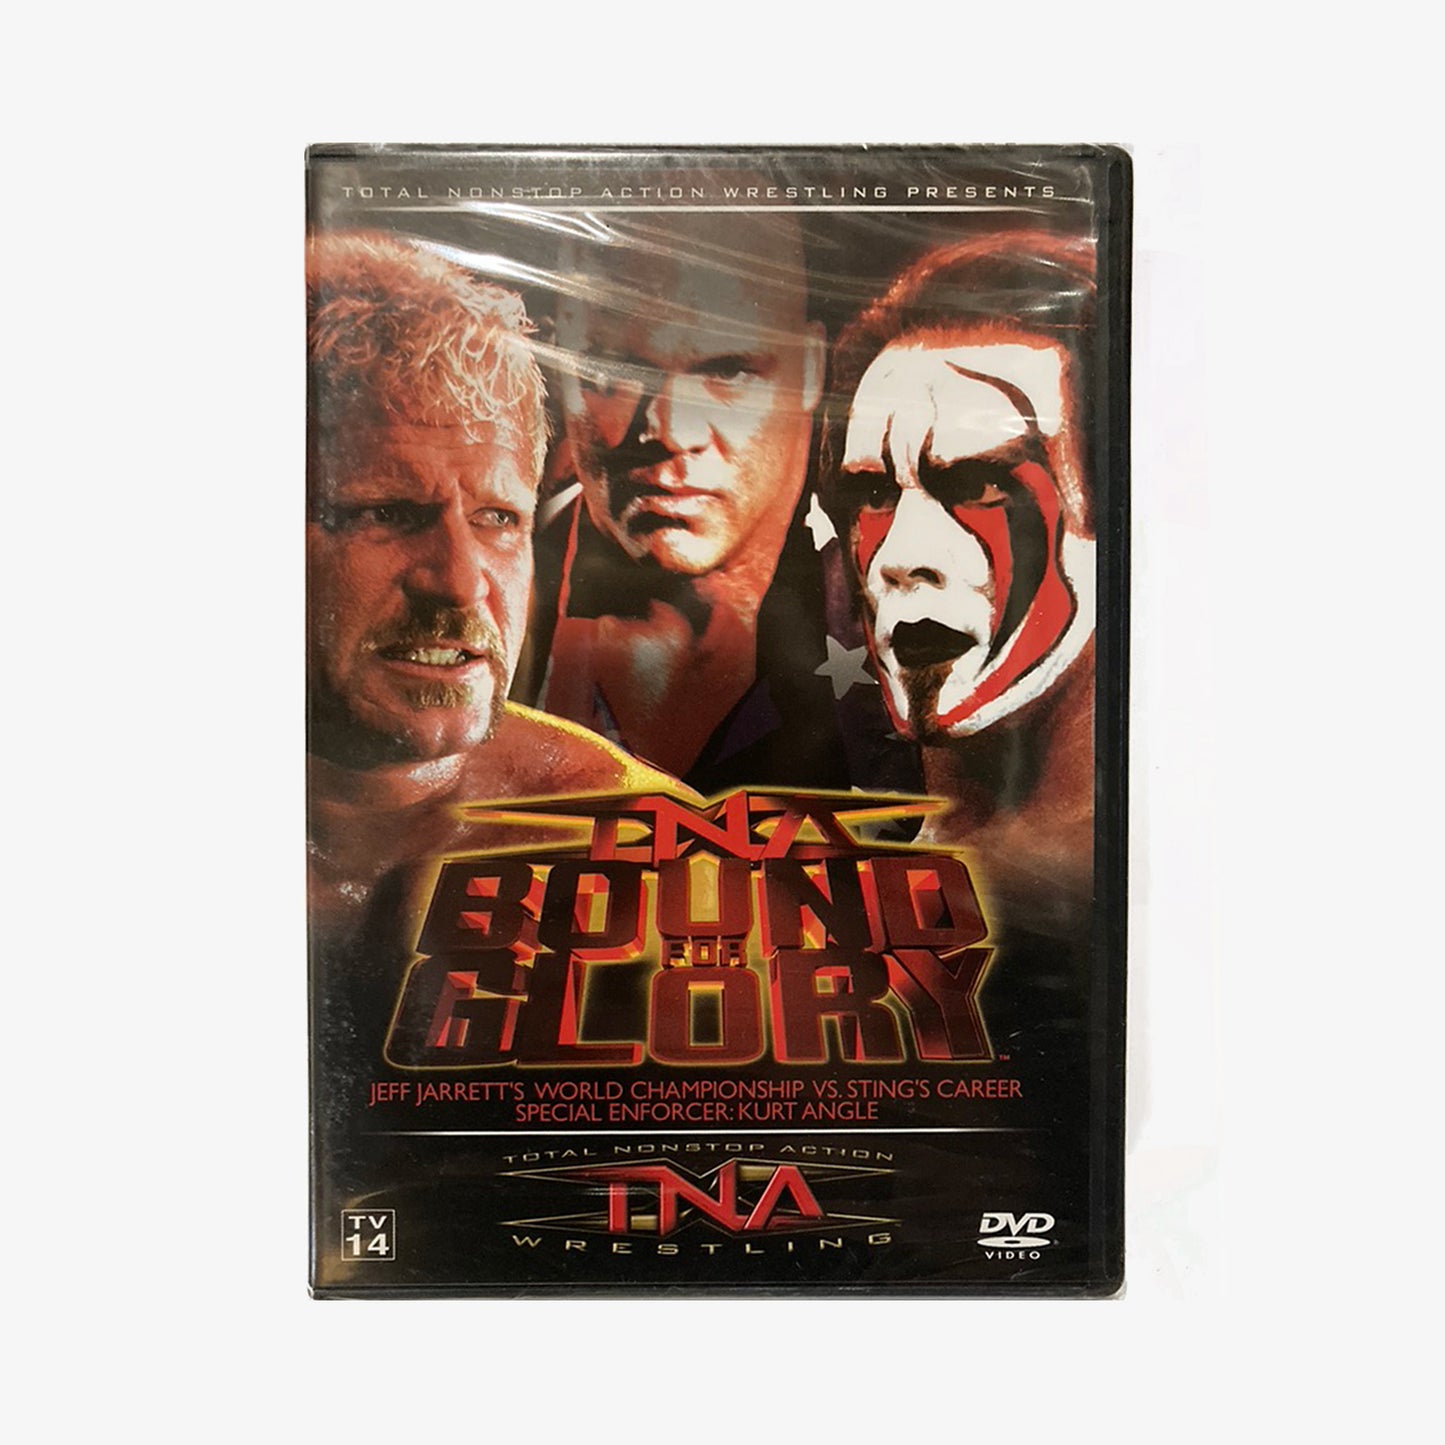 TNA Wrestling Bound For Glory 2006 DVD from Fightabilia.com